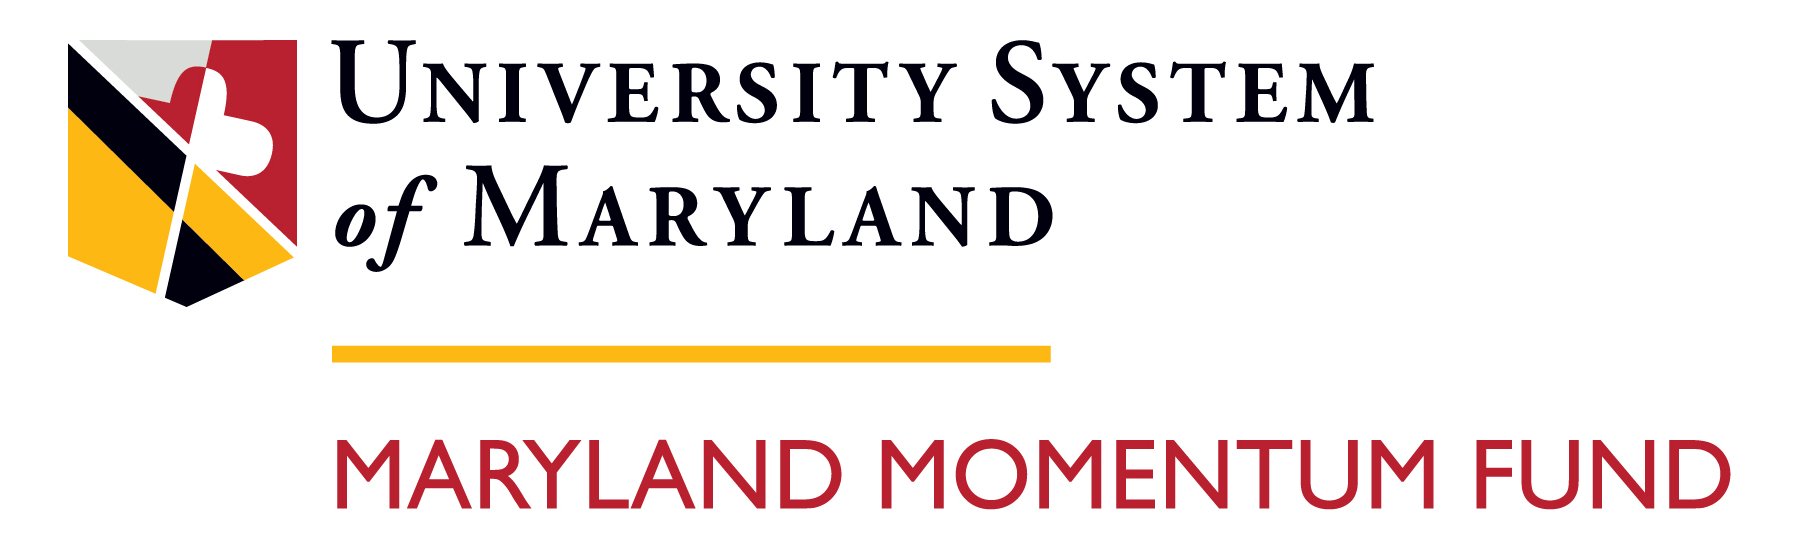 USM_Maryland Momentum Fund.jpg